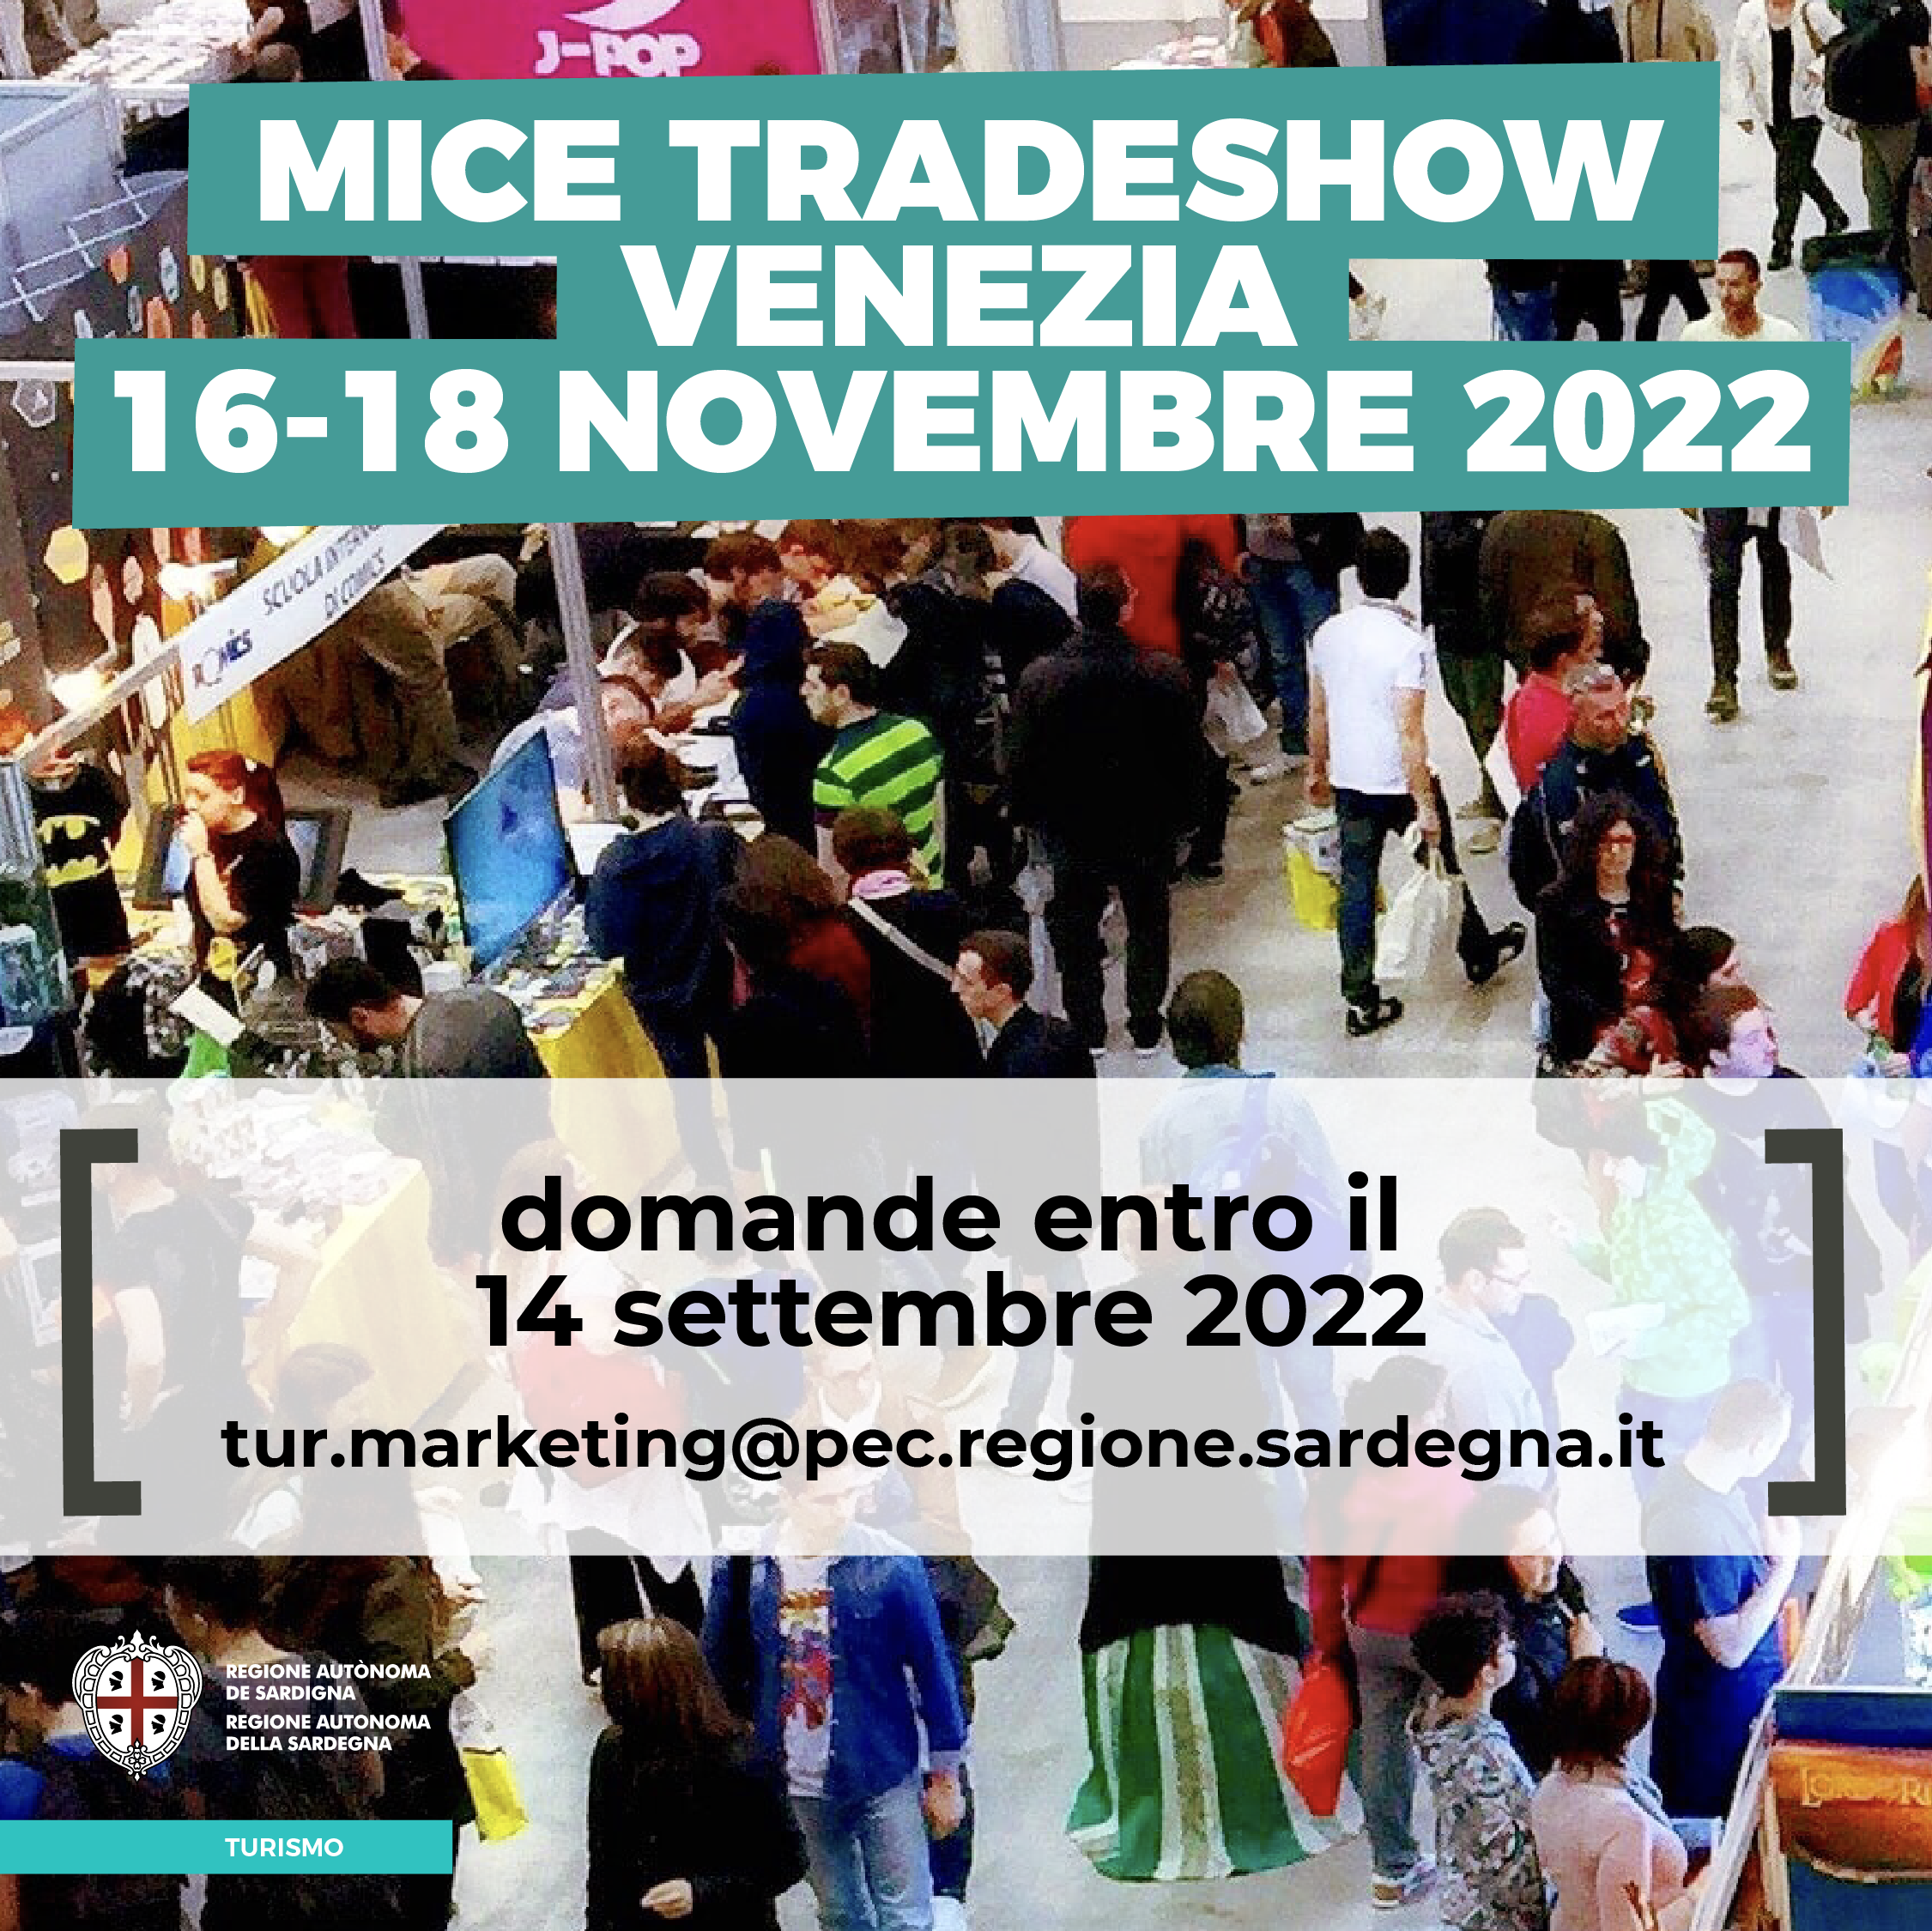 Mice Tradeshow Venezia 2022